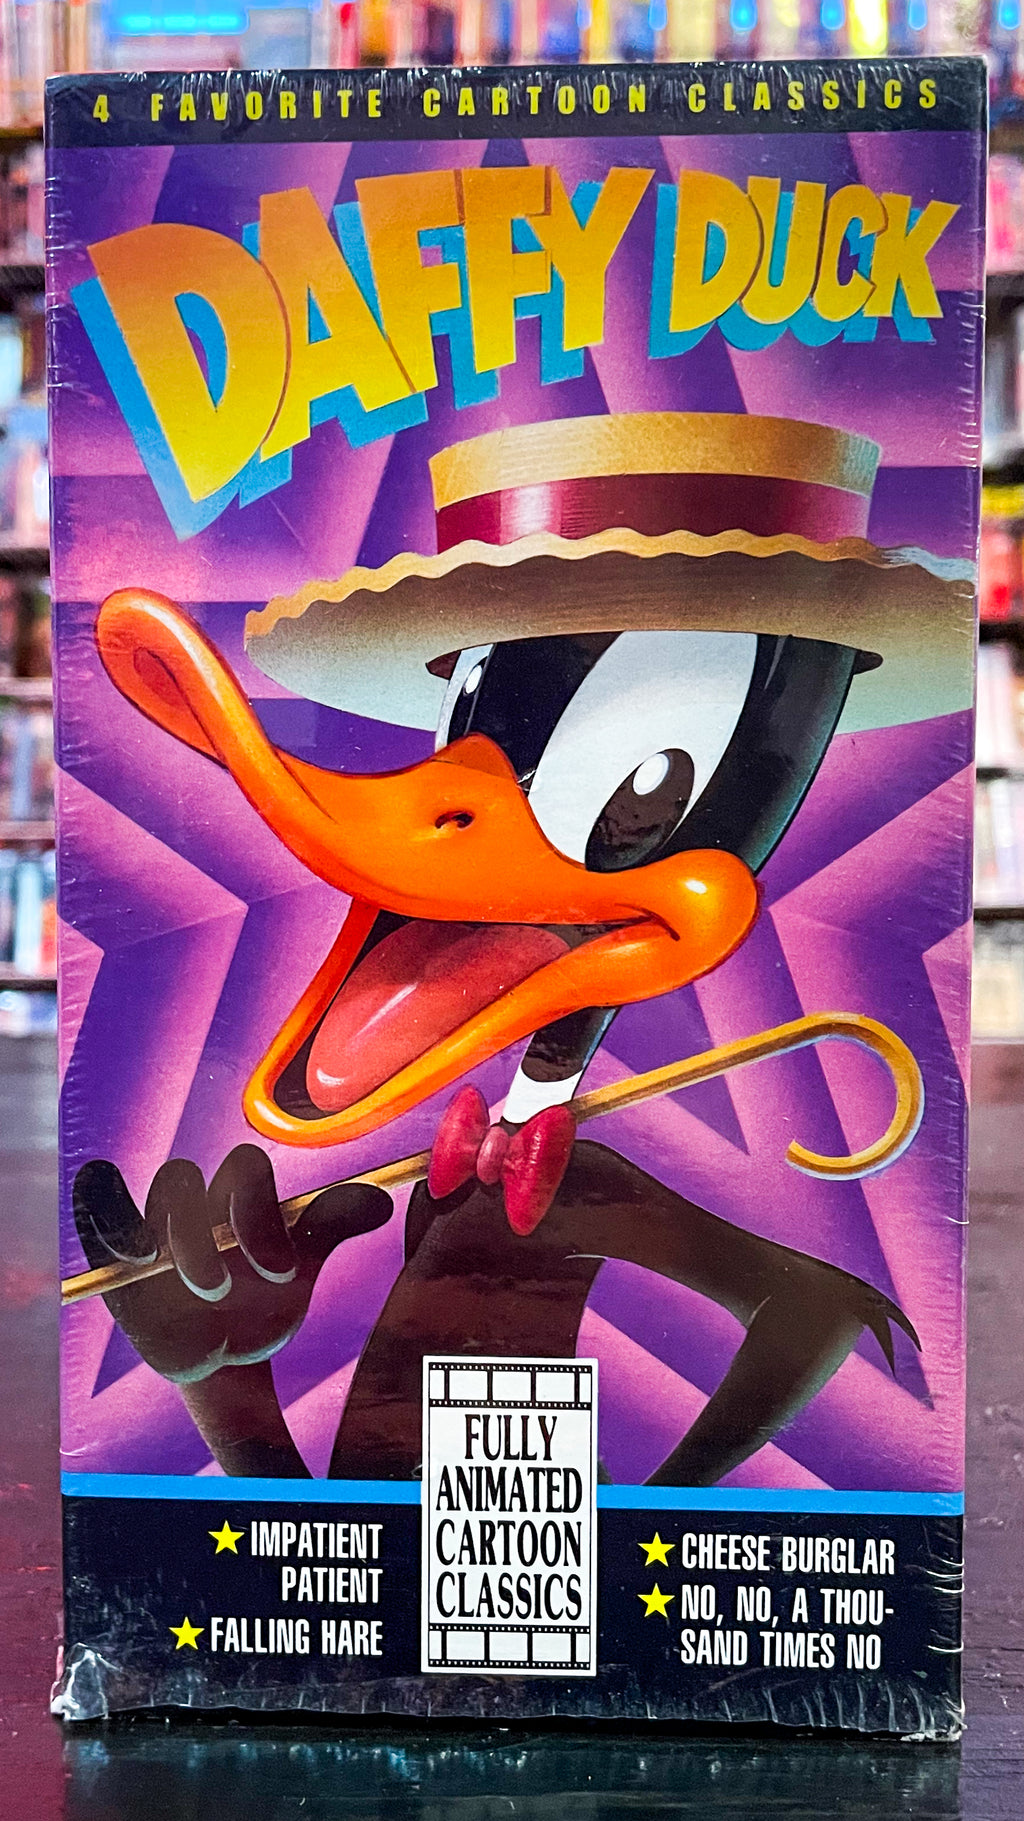 Daffy Duck - 4 Favorite Cartoon Classics